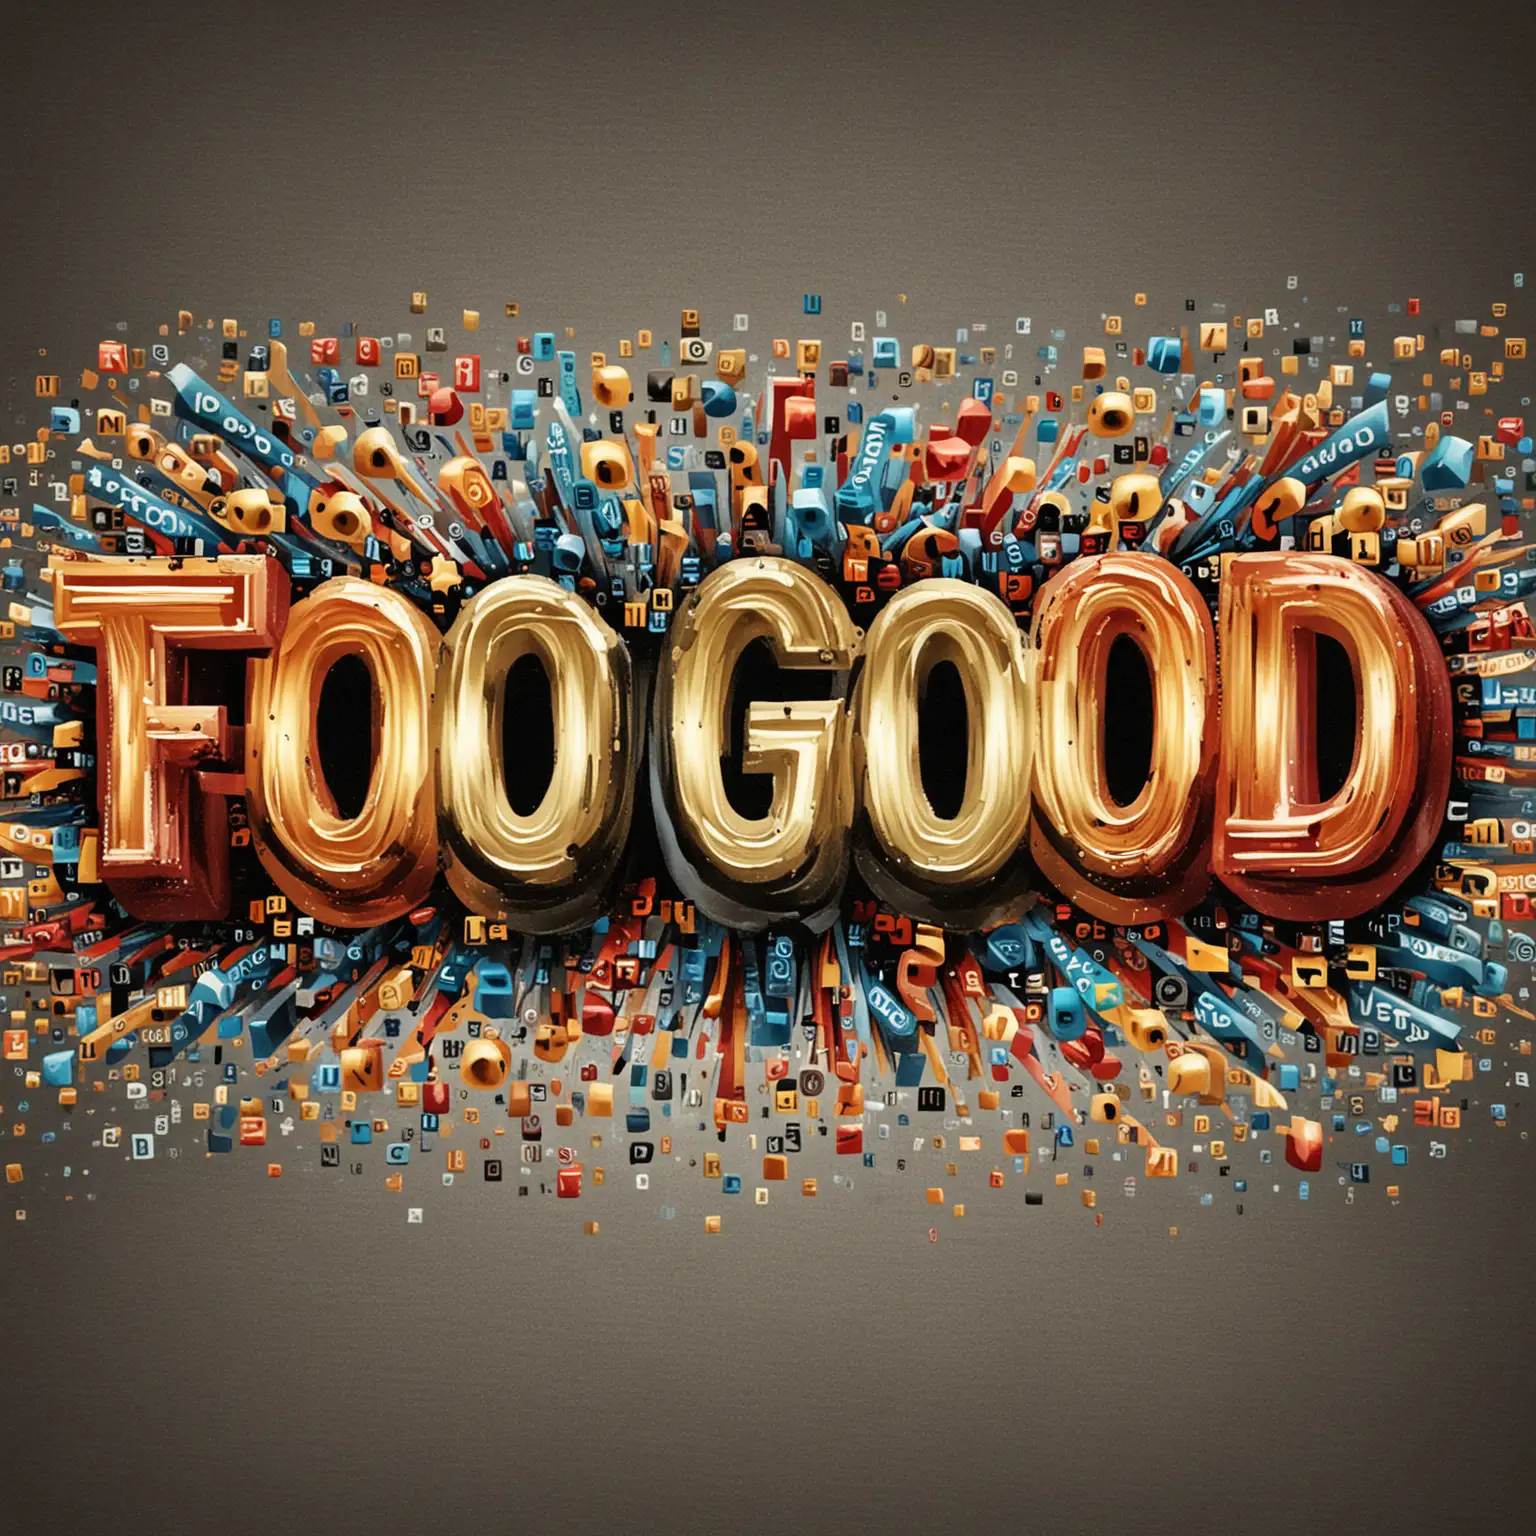 Create flashy "Too Good!" word art 